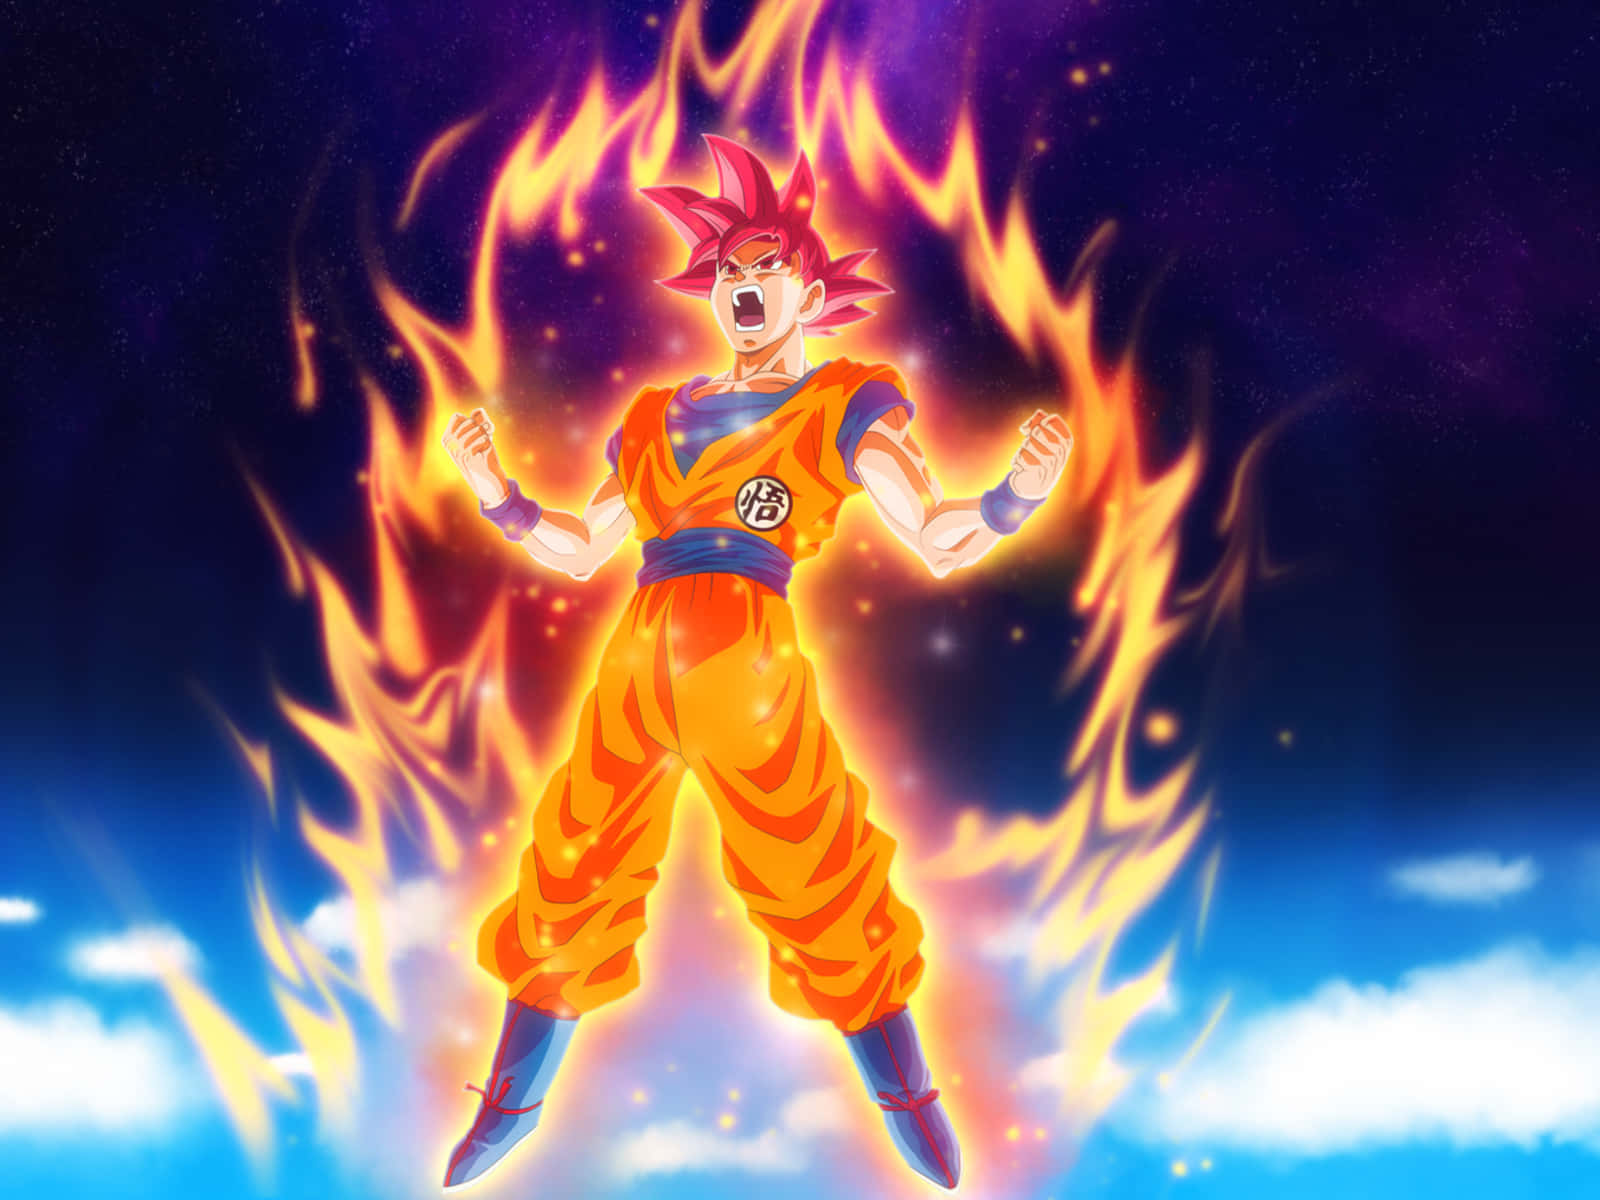 Imagemdo Goku Super Saiyan Do Dragon Ball Z.